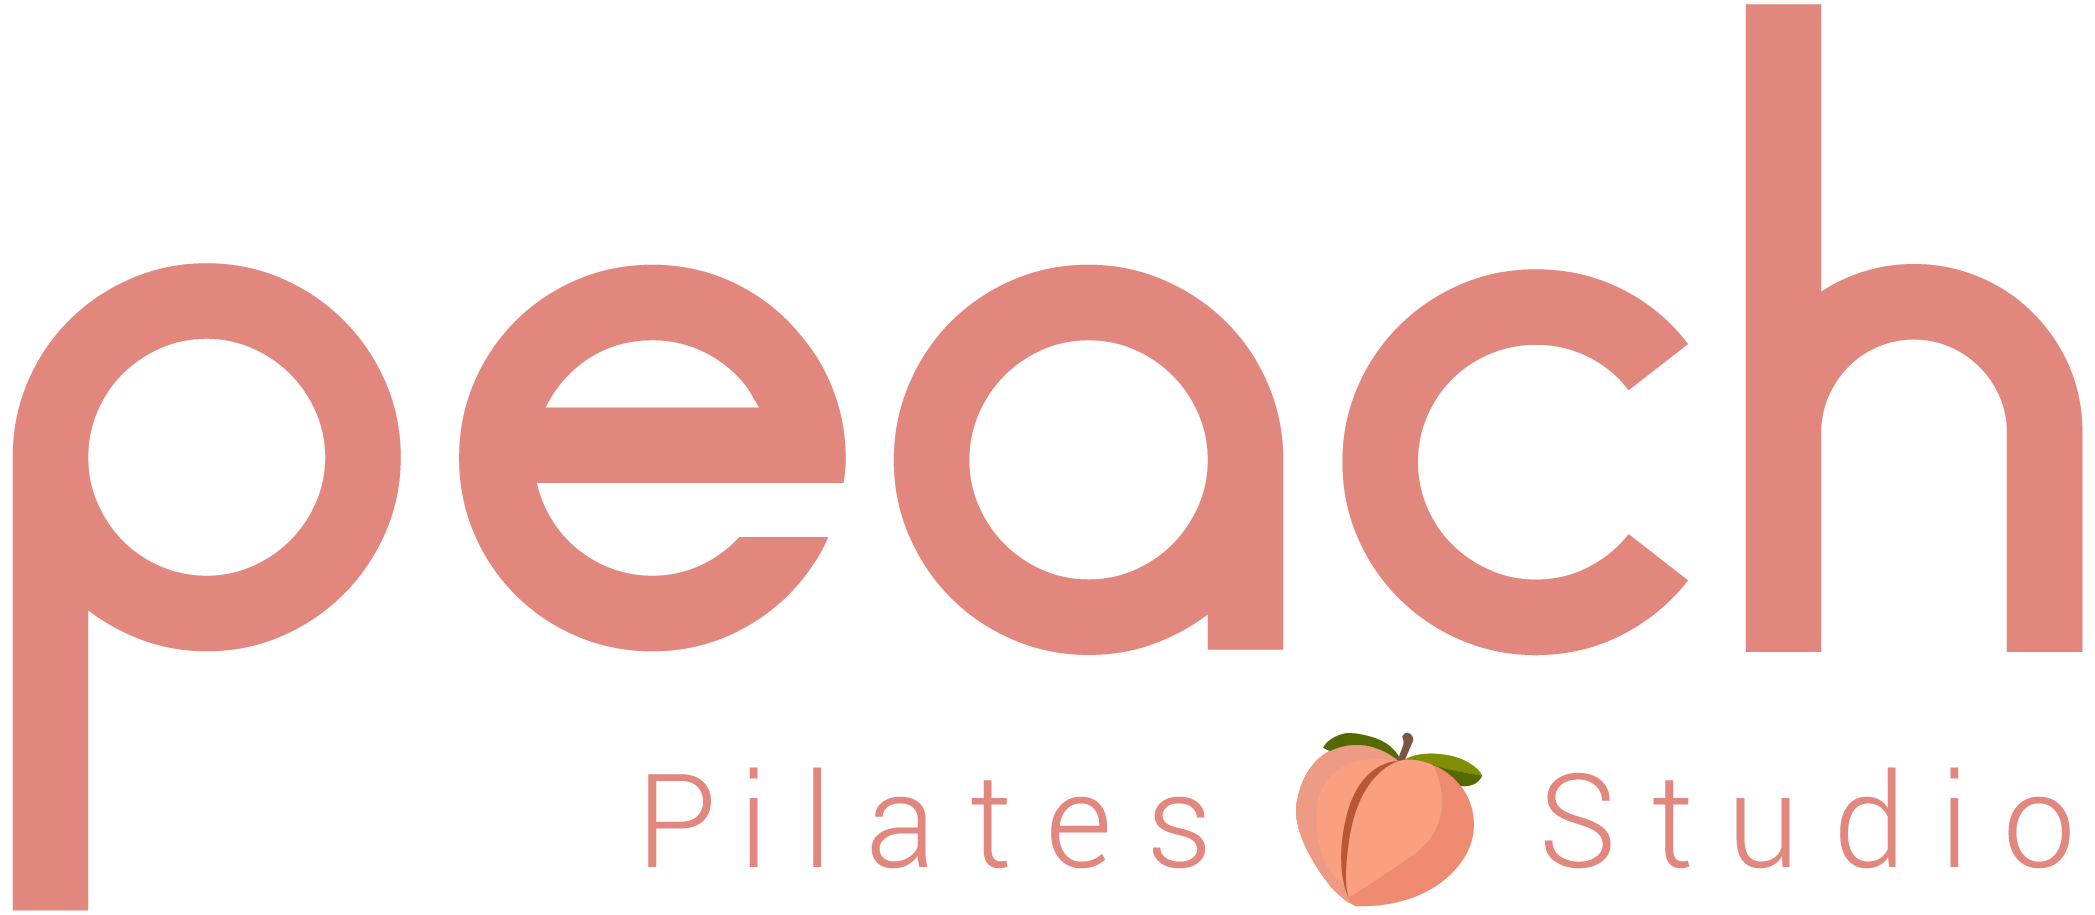 Peach Pilates